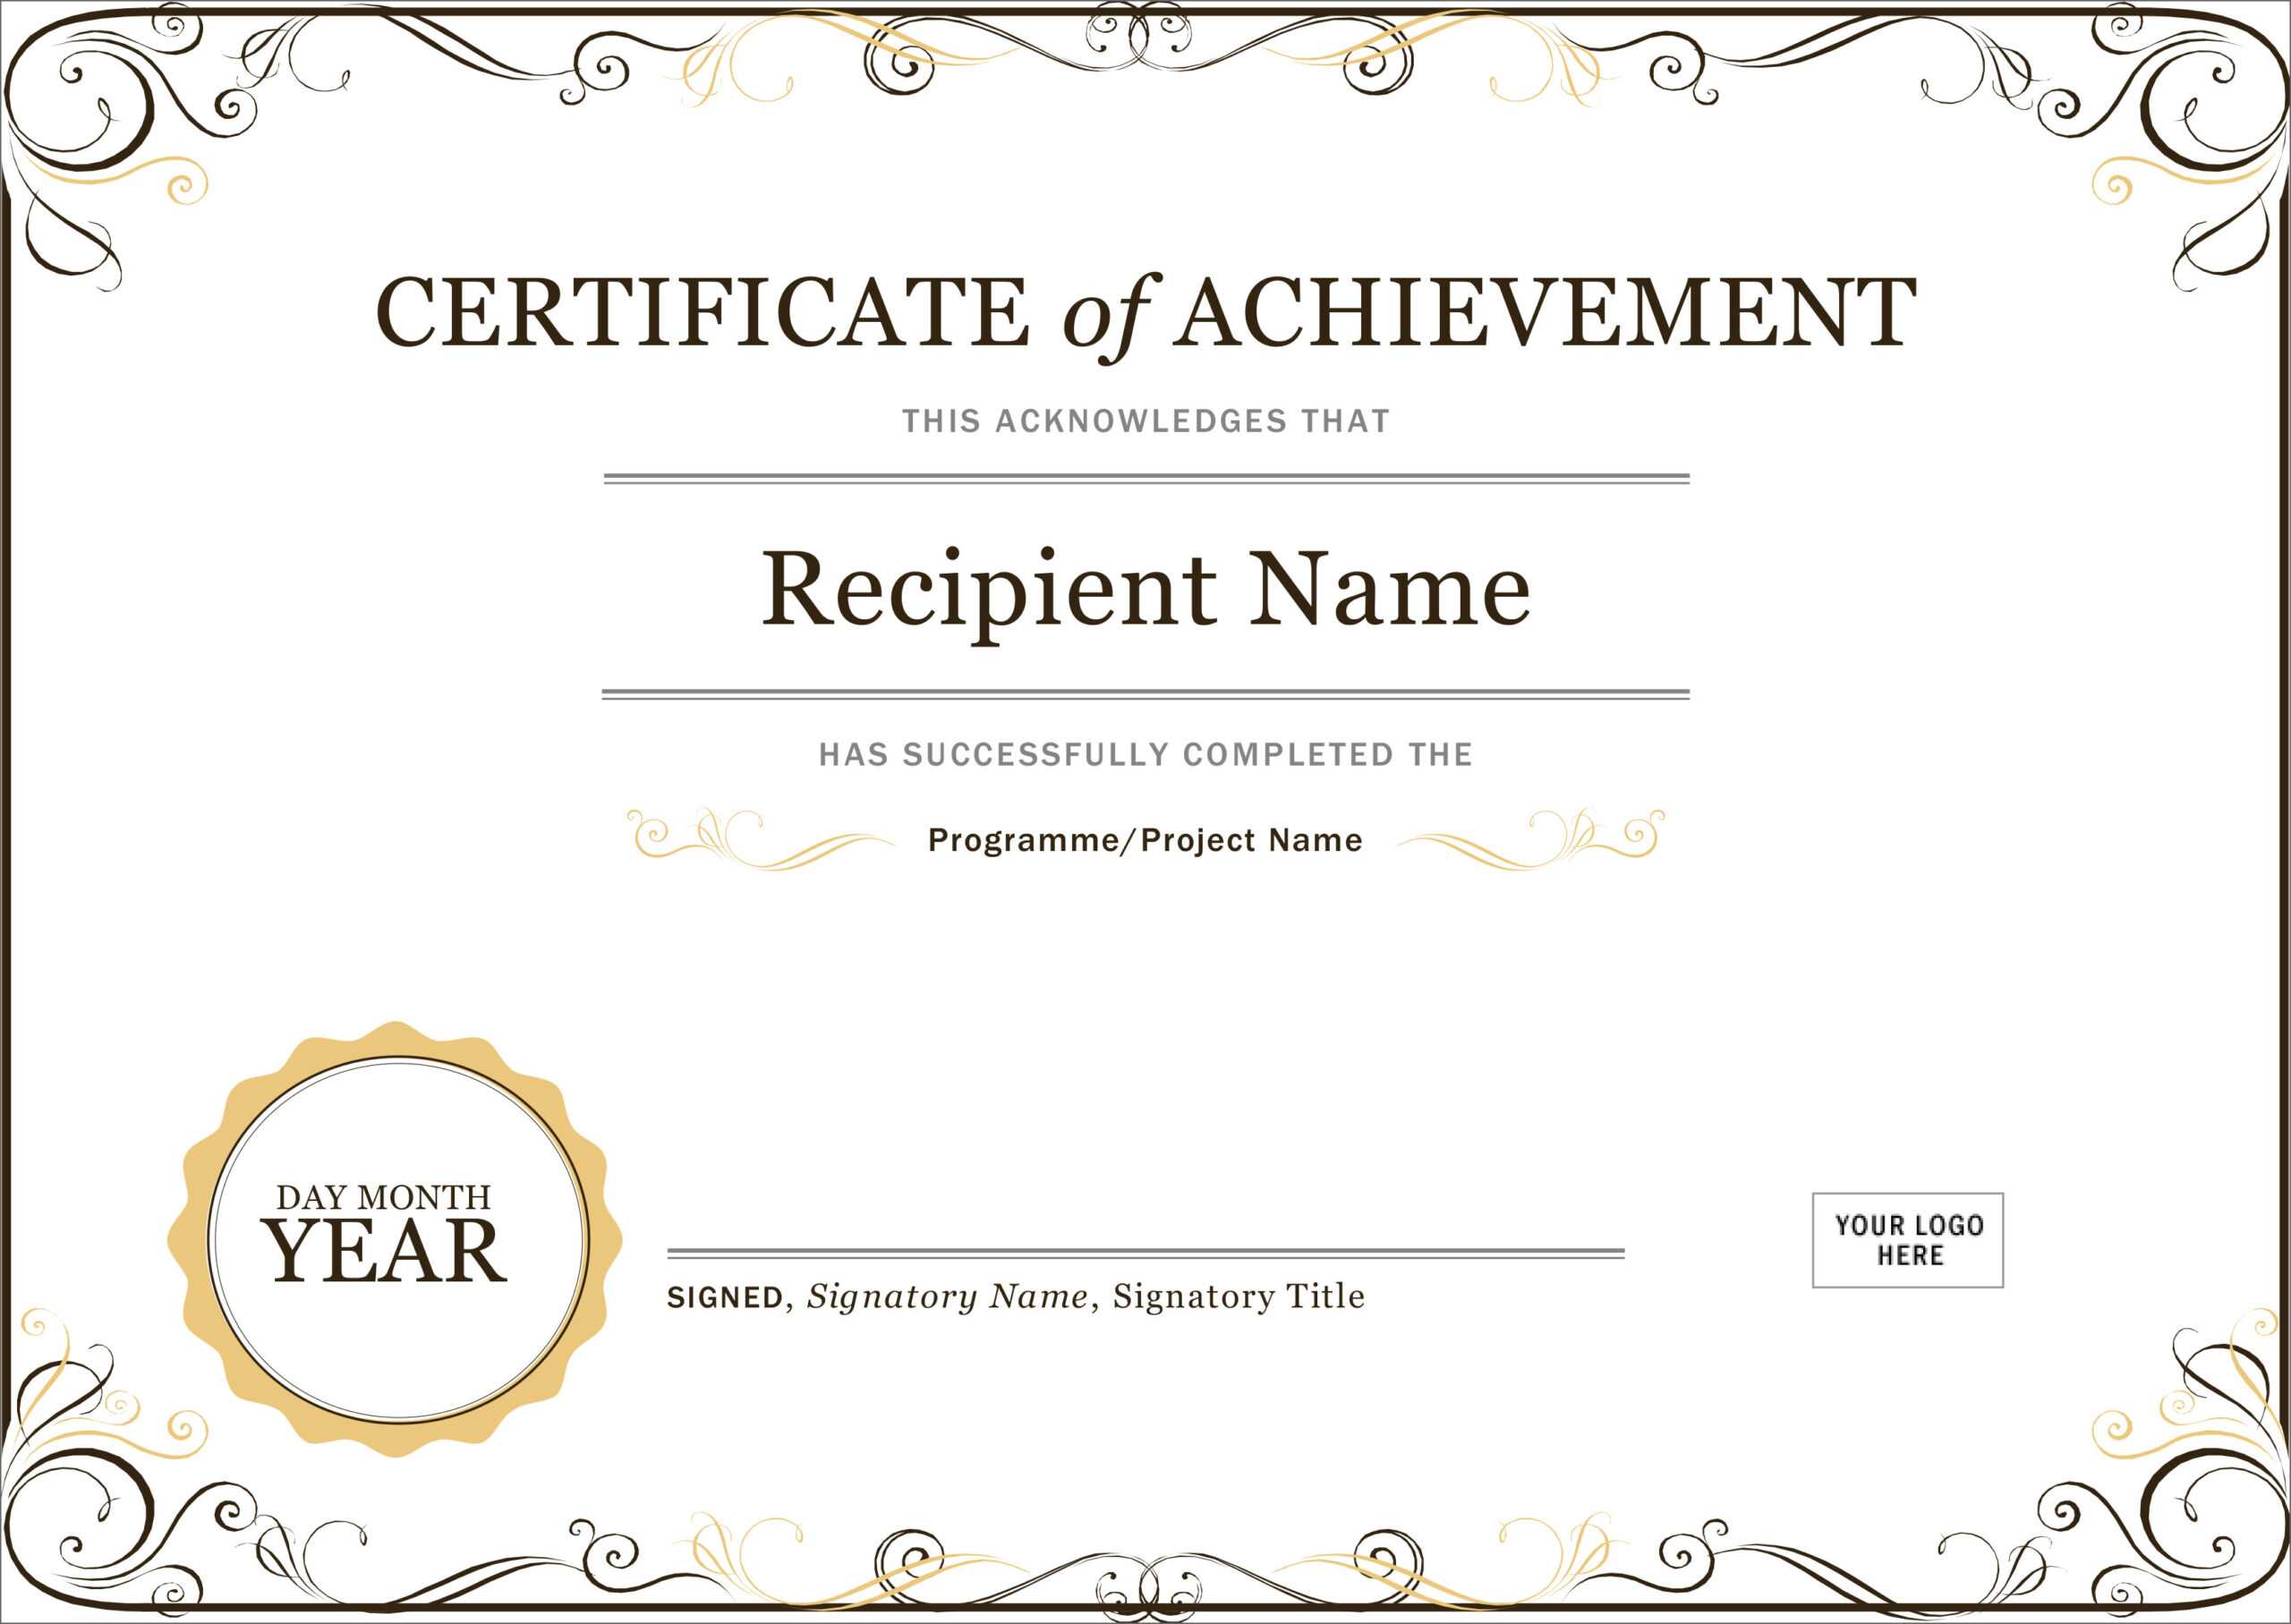 congratulations-certificate-2-blank-certificate-template-free-certificate-templates-birth